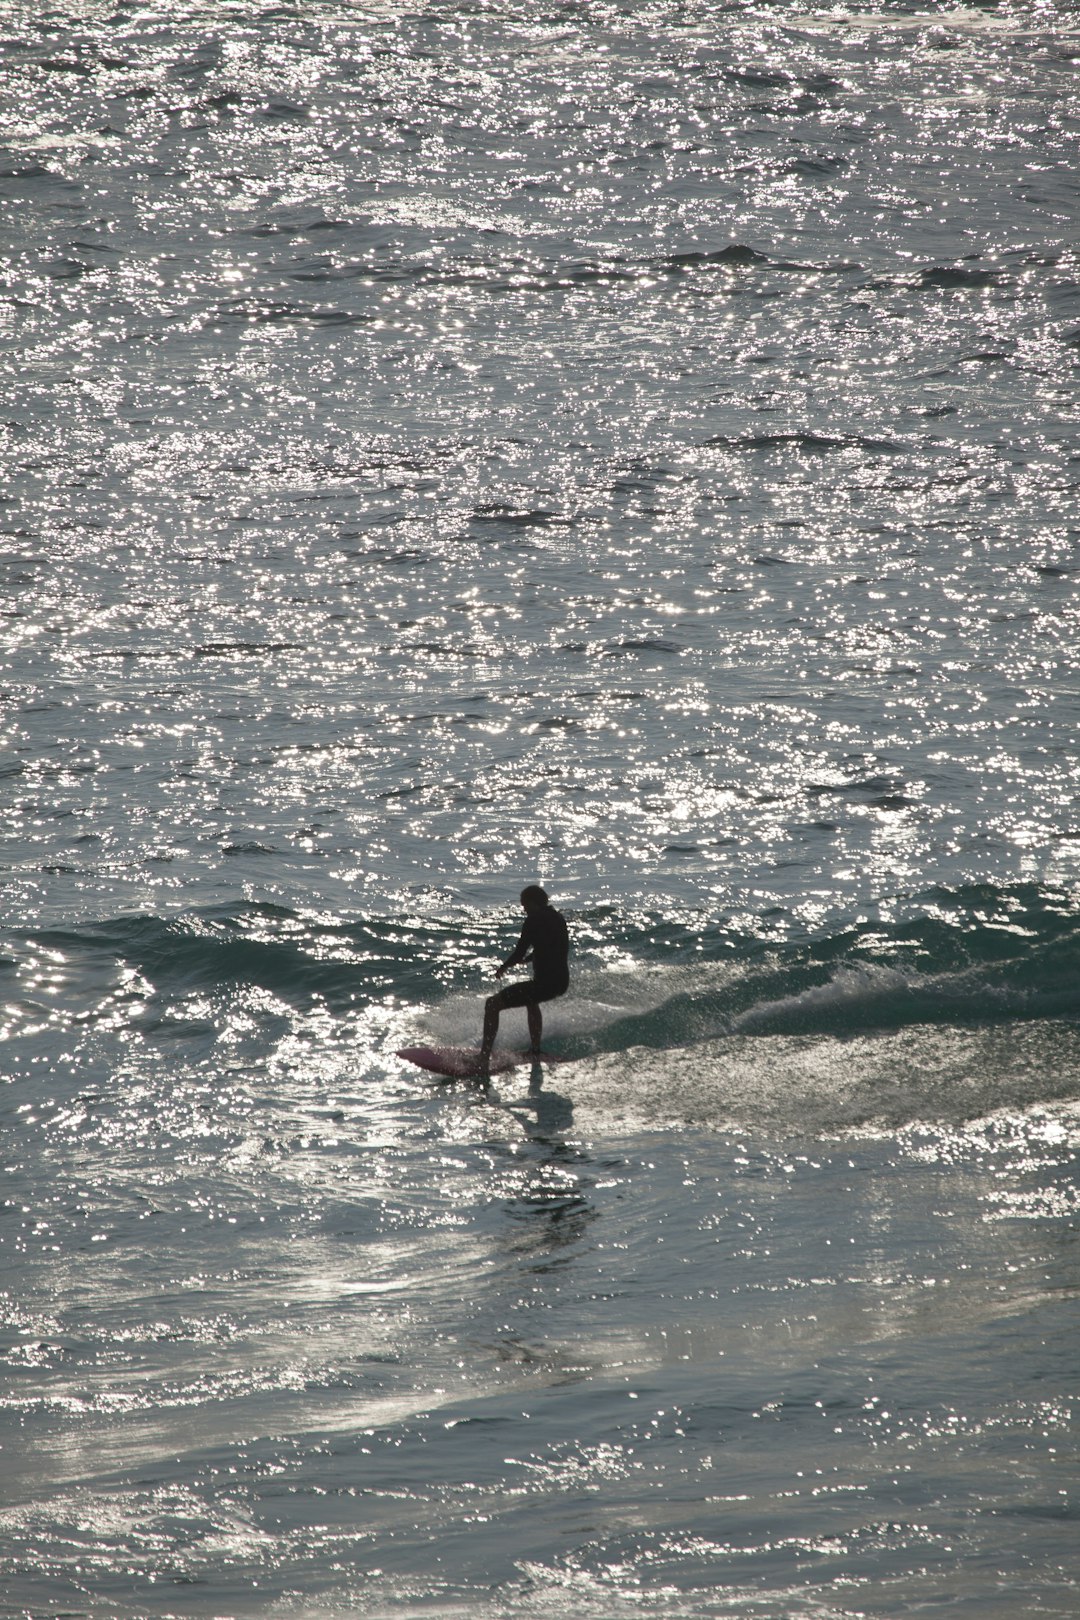 Surfing photo spot Tamarama Beach Bondi